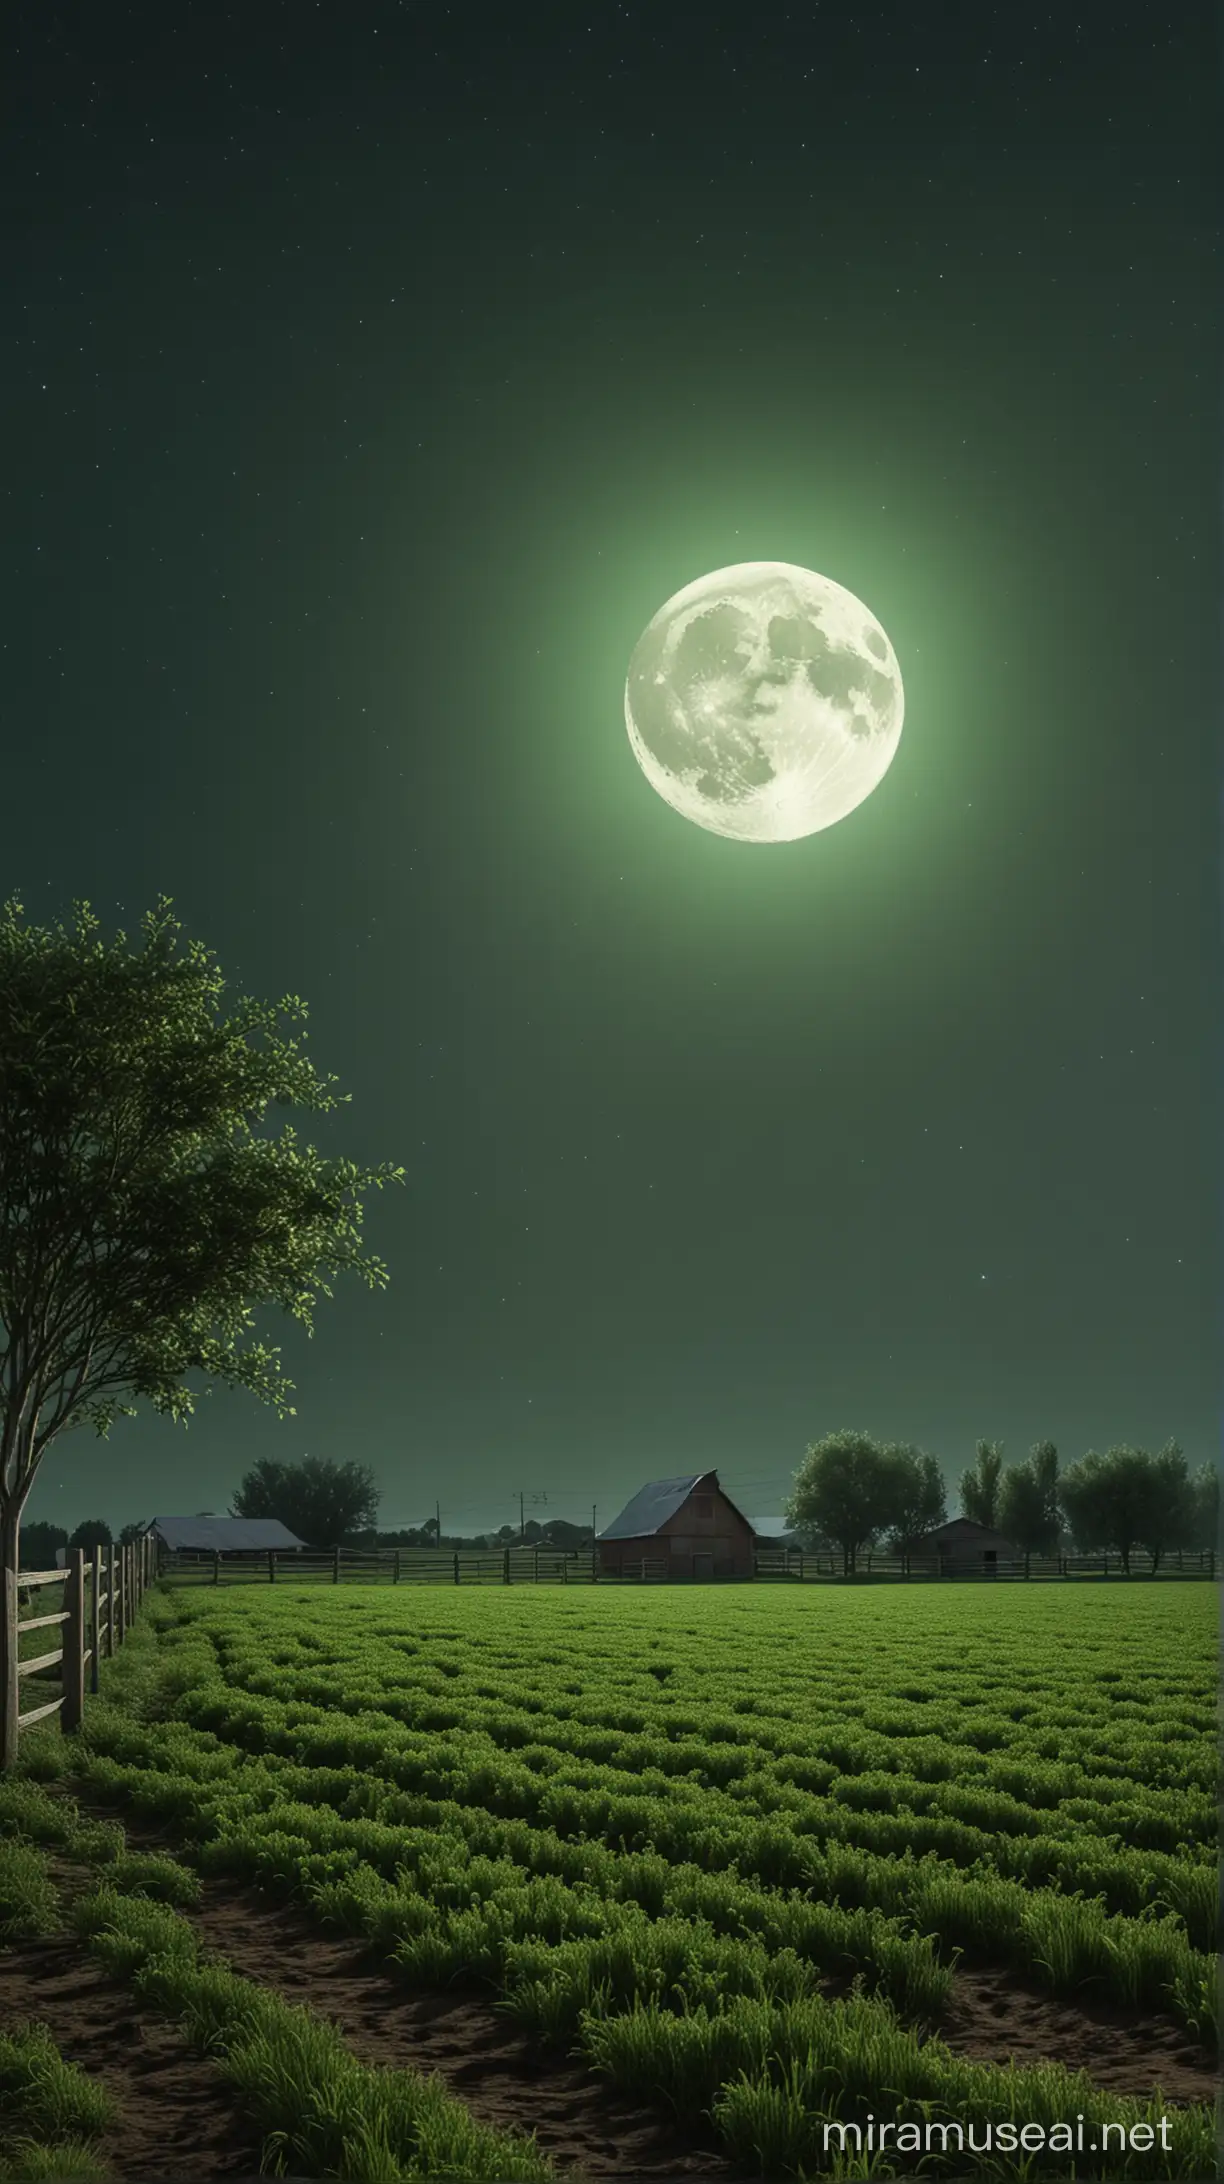 Rustic Green Farm Illuminated by a Luminous Moon